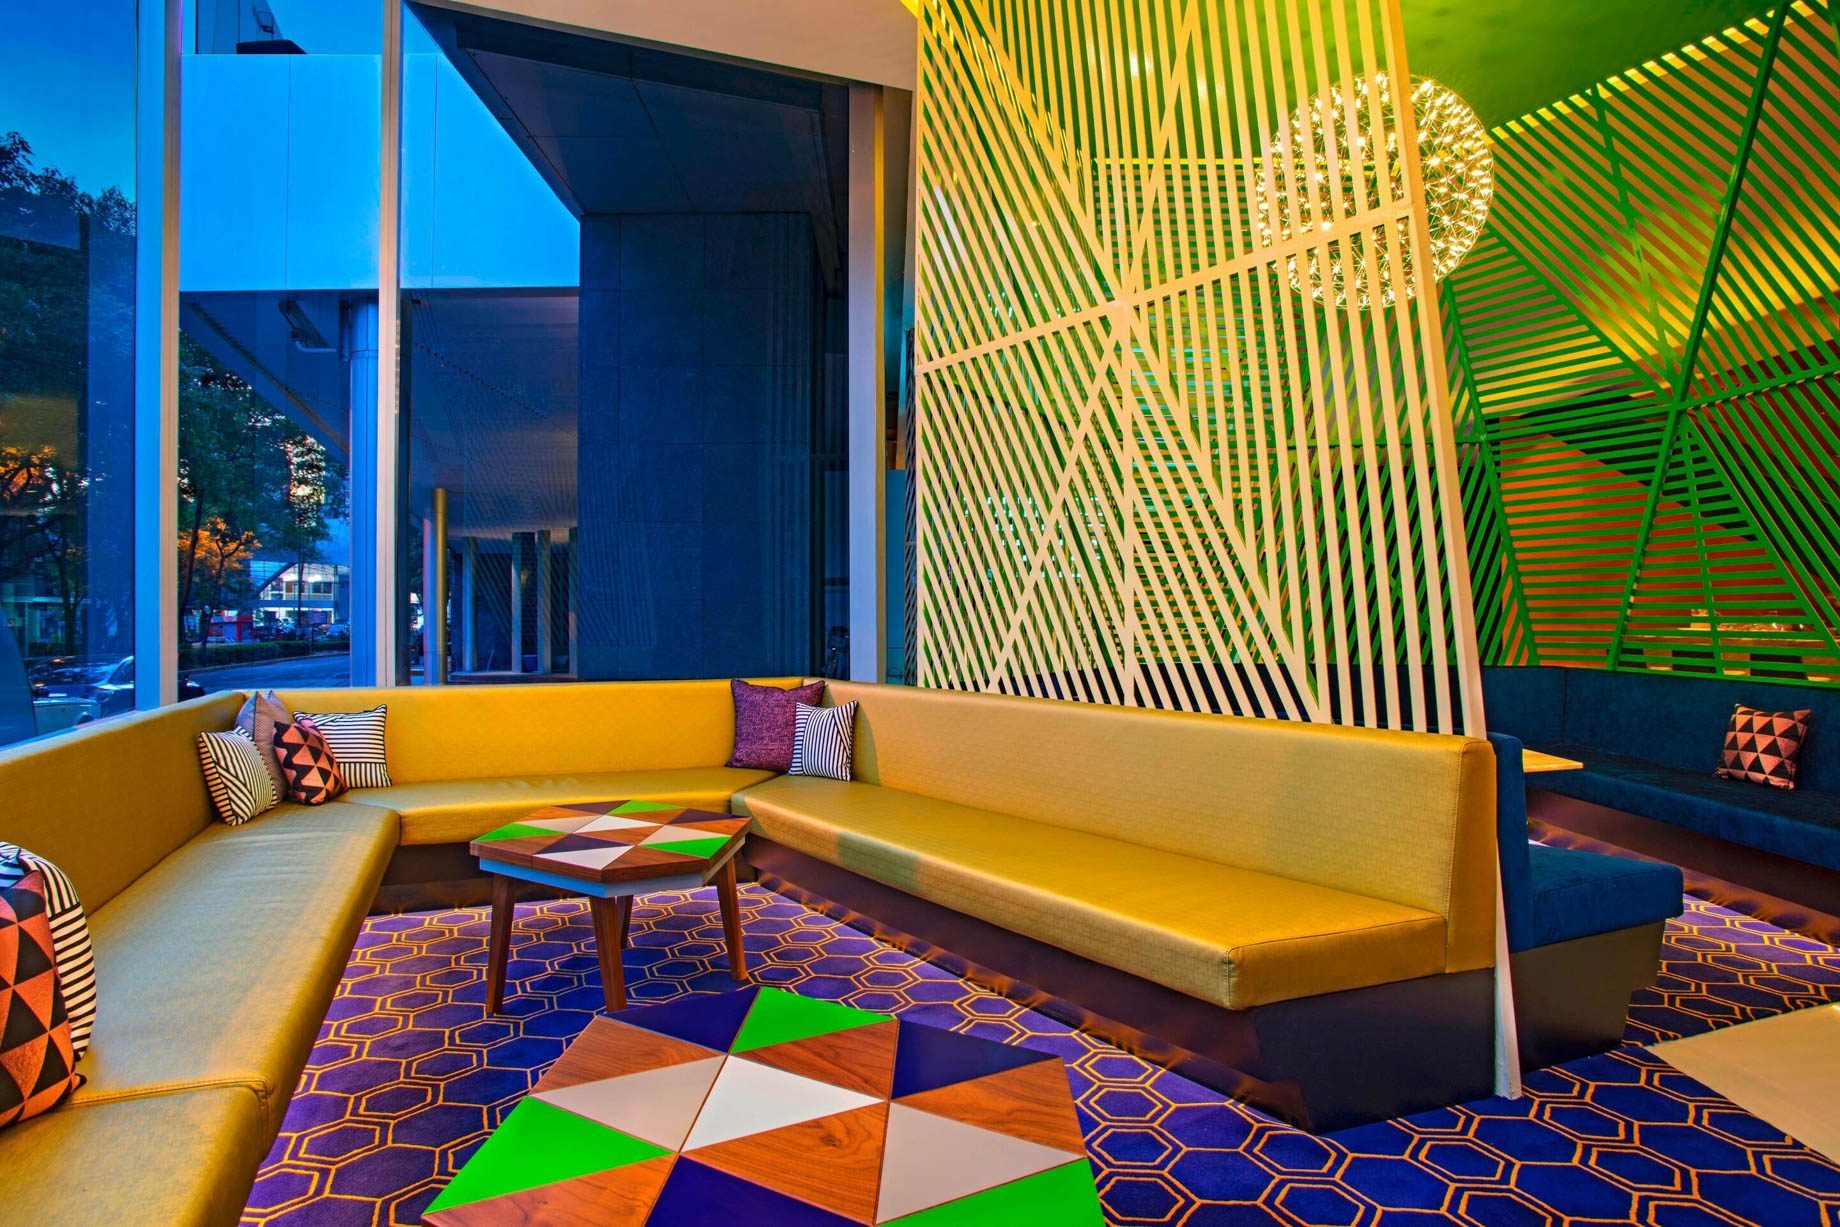 W Mexico City Hotel – Polanco, Mexico City, Mexico – Lounge